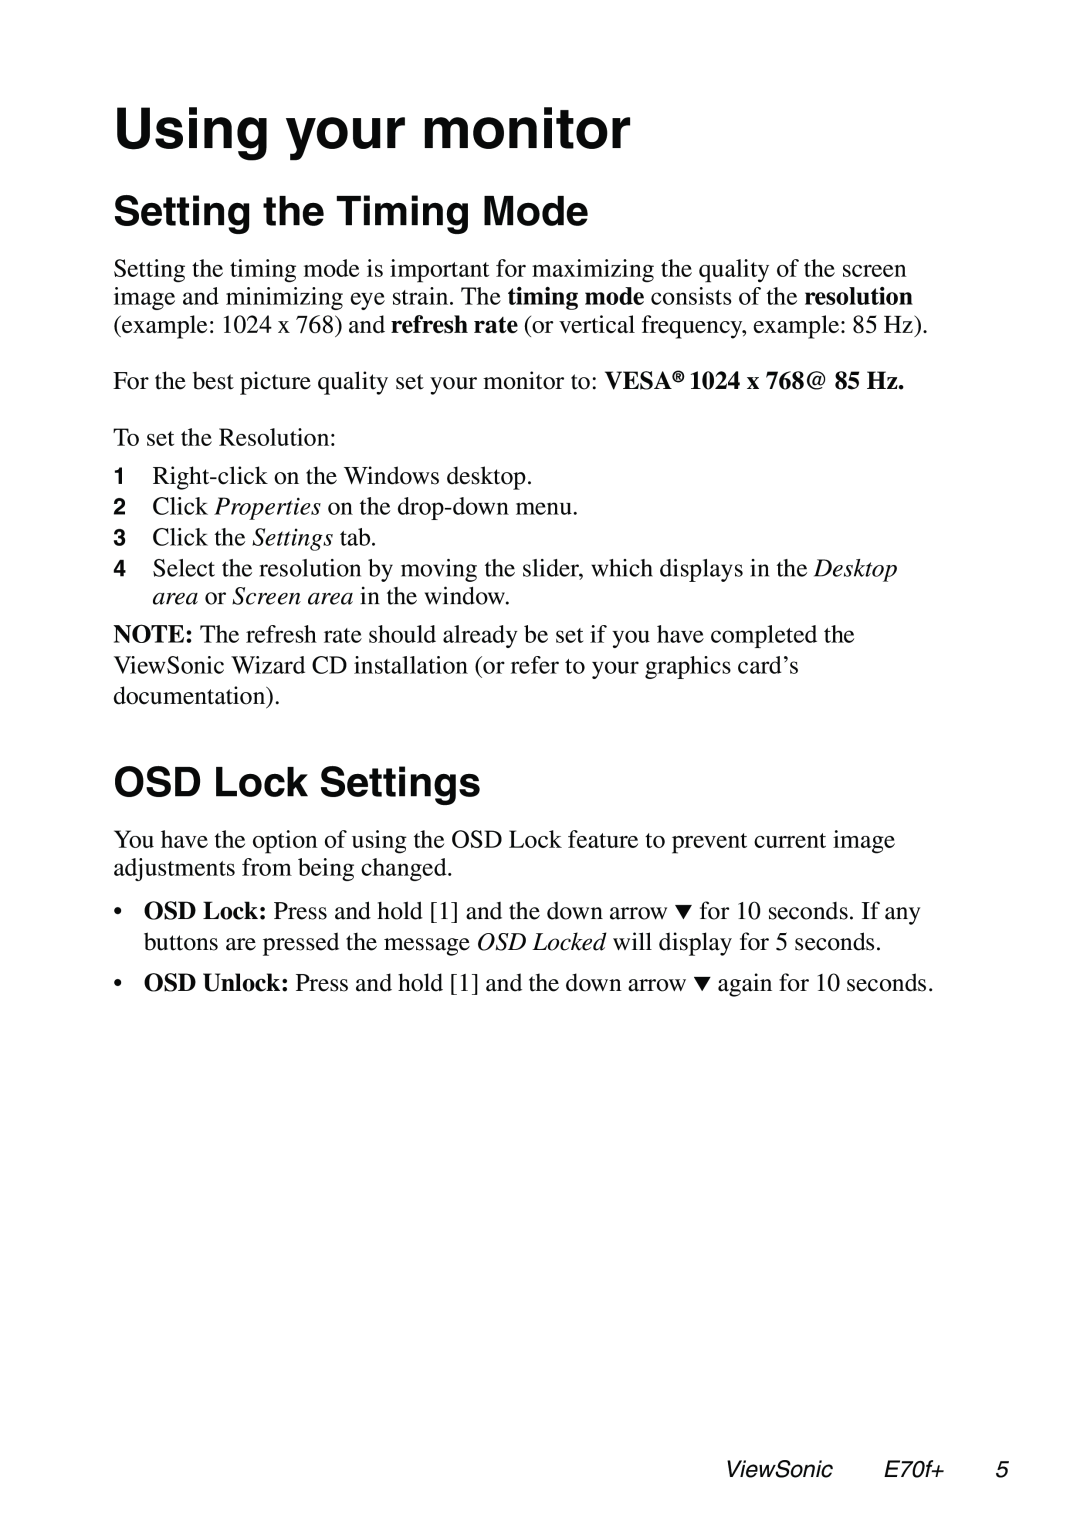 ViewSonic E70f+ manual Using your monitor, Setting the Timing Mode, OSD Lock Settings 